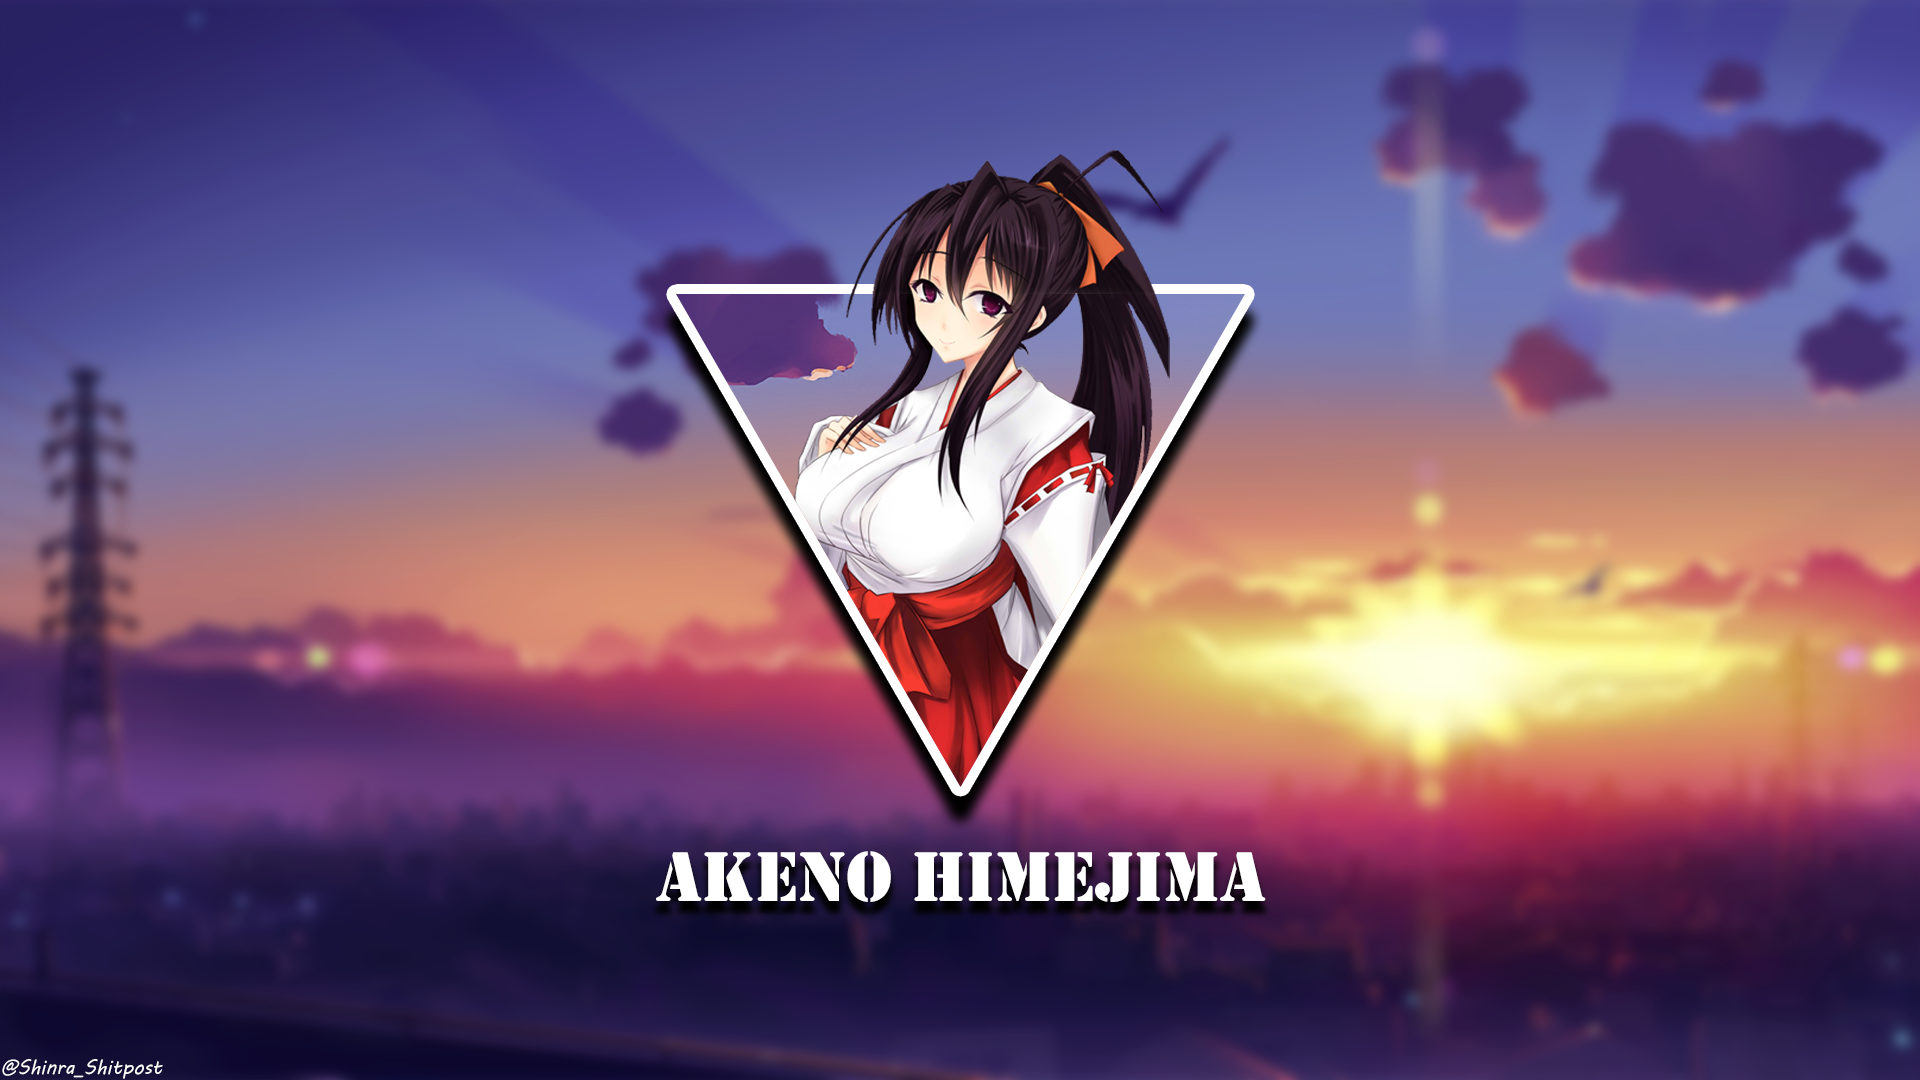 Himejima Akeno Sunset Anime Girls Landscape Picture In Picture 1920x1080